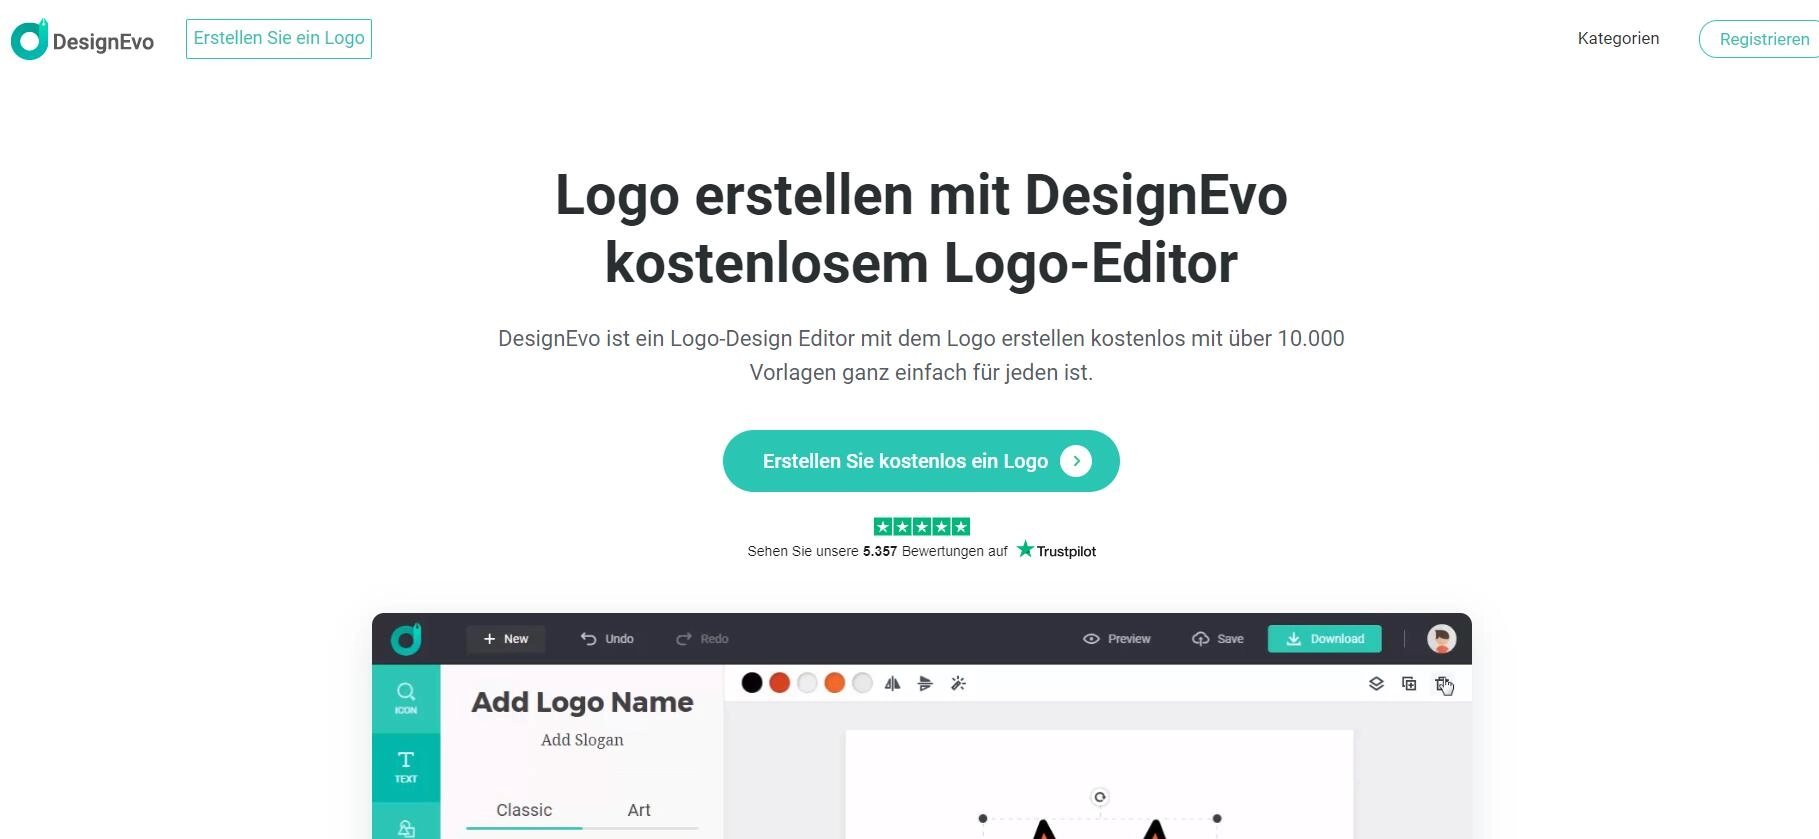 KI Logo kostenlos erstellen-DesignEvo